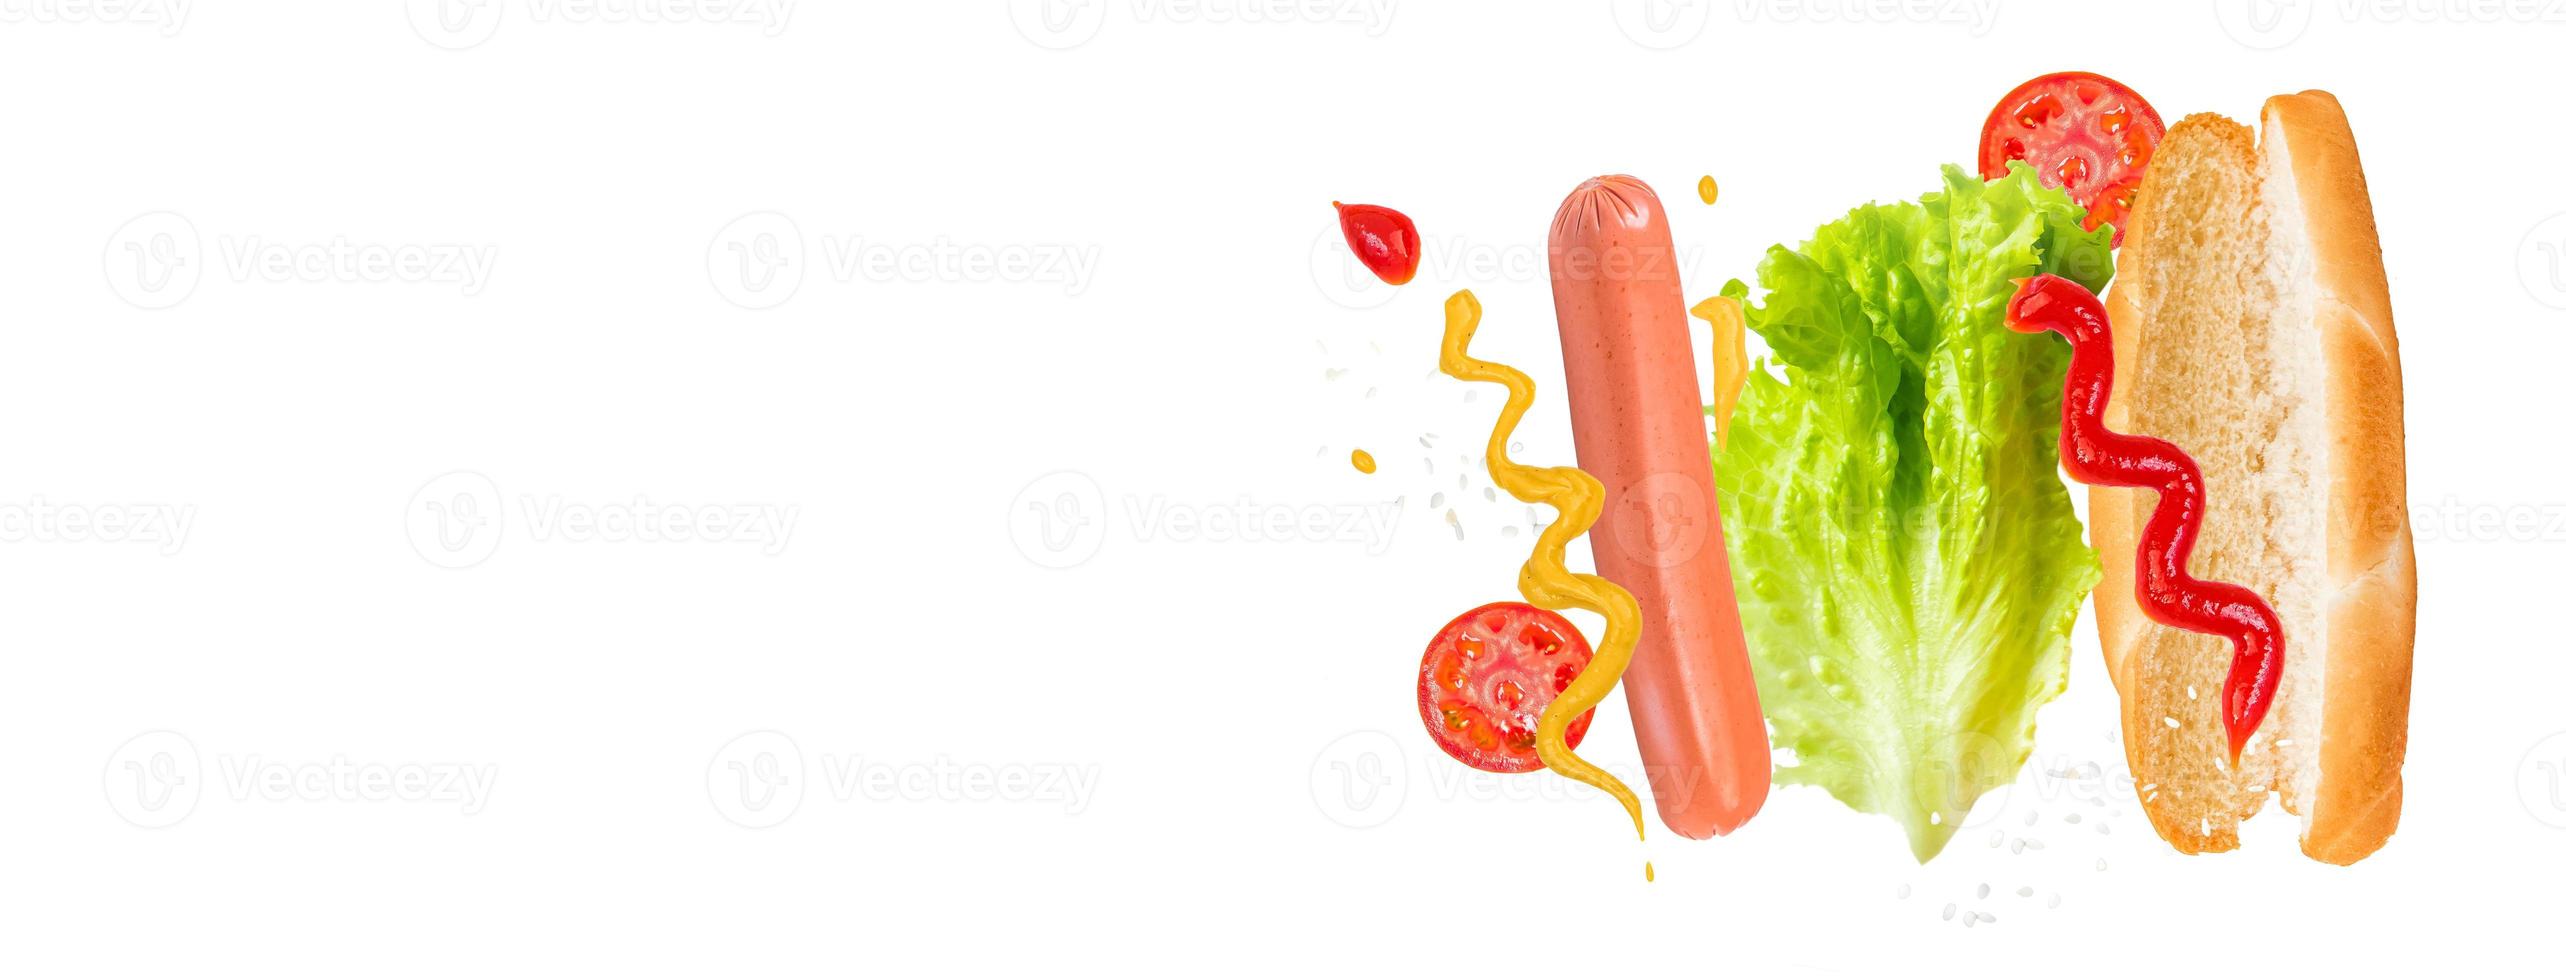 ingredientes voadores para delicioso cachorro-quente em fundo branco. levitando salsicha, tomate e alface. foto